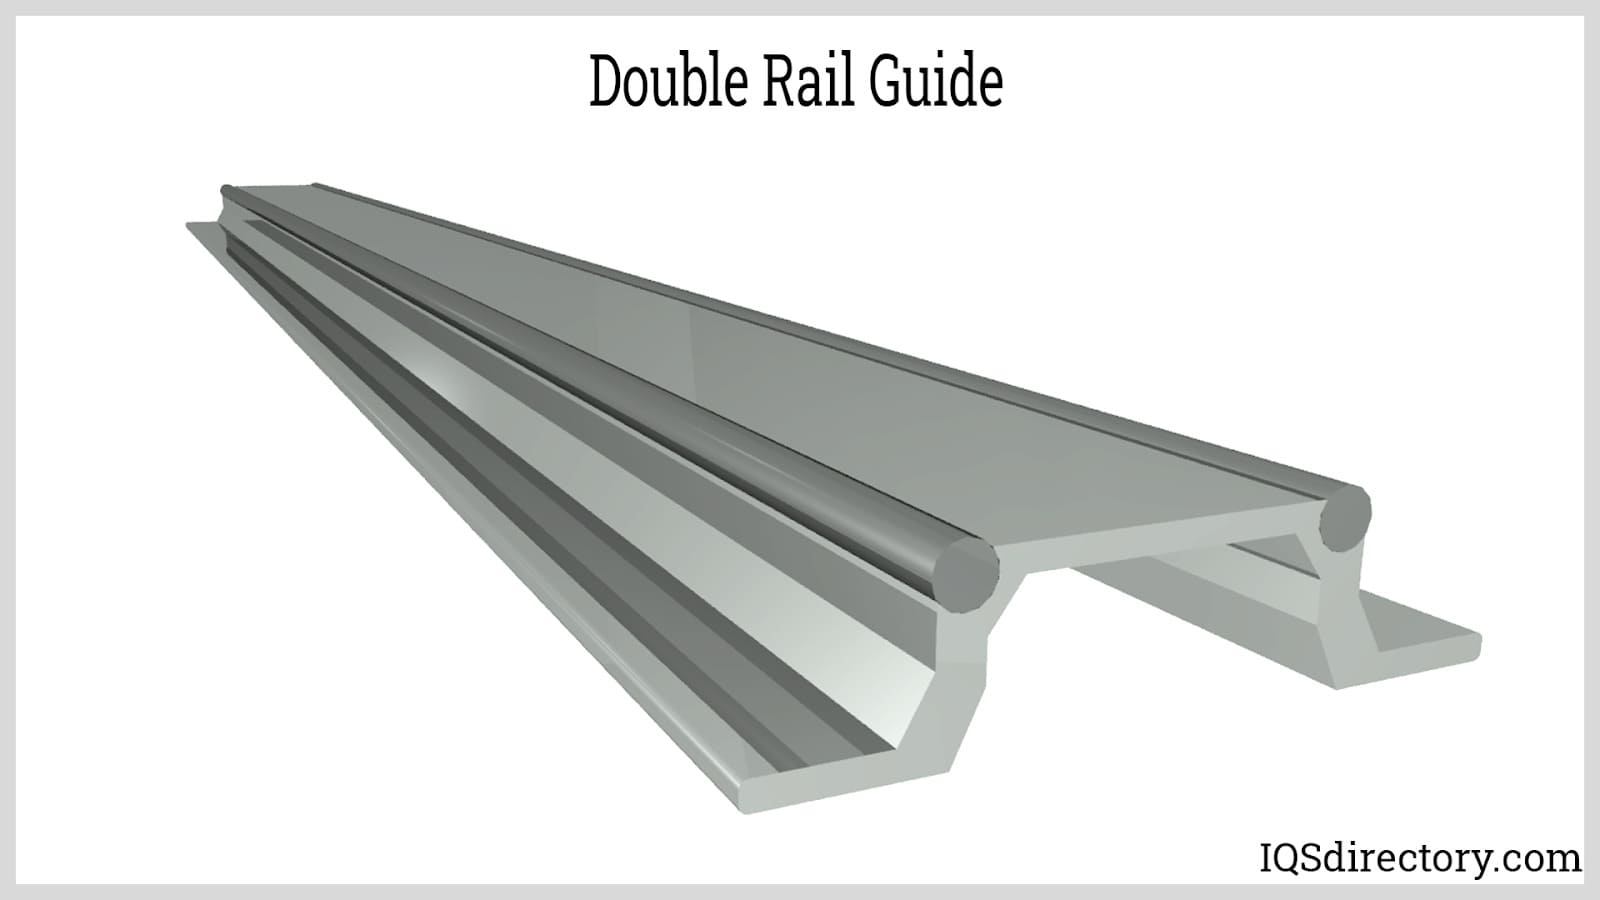 Double Rail Guide